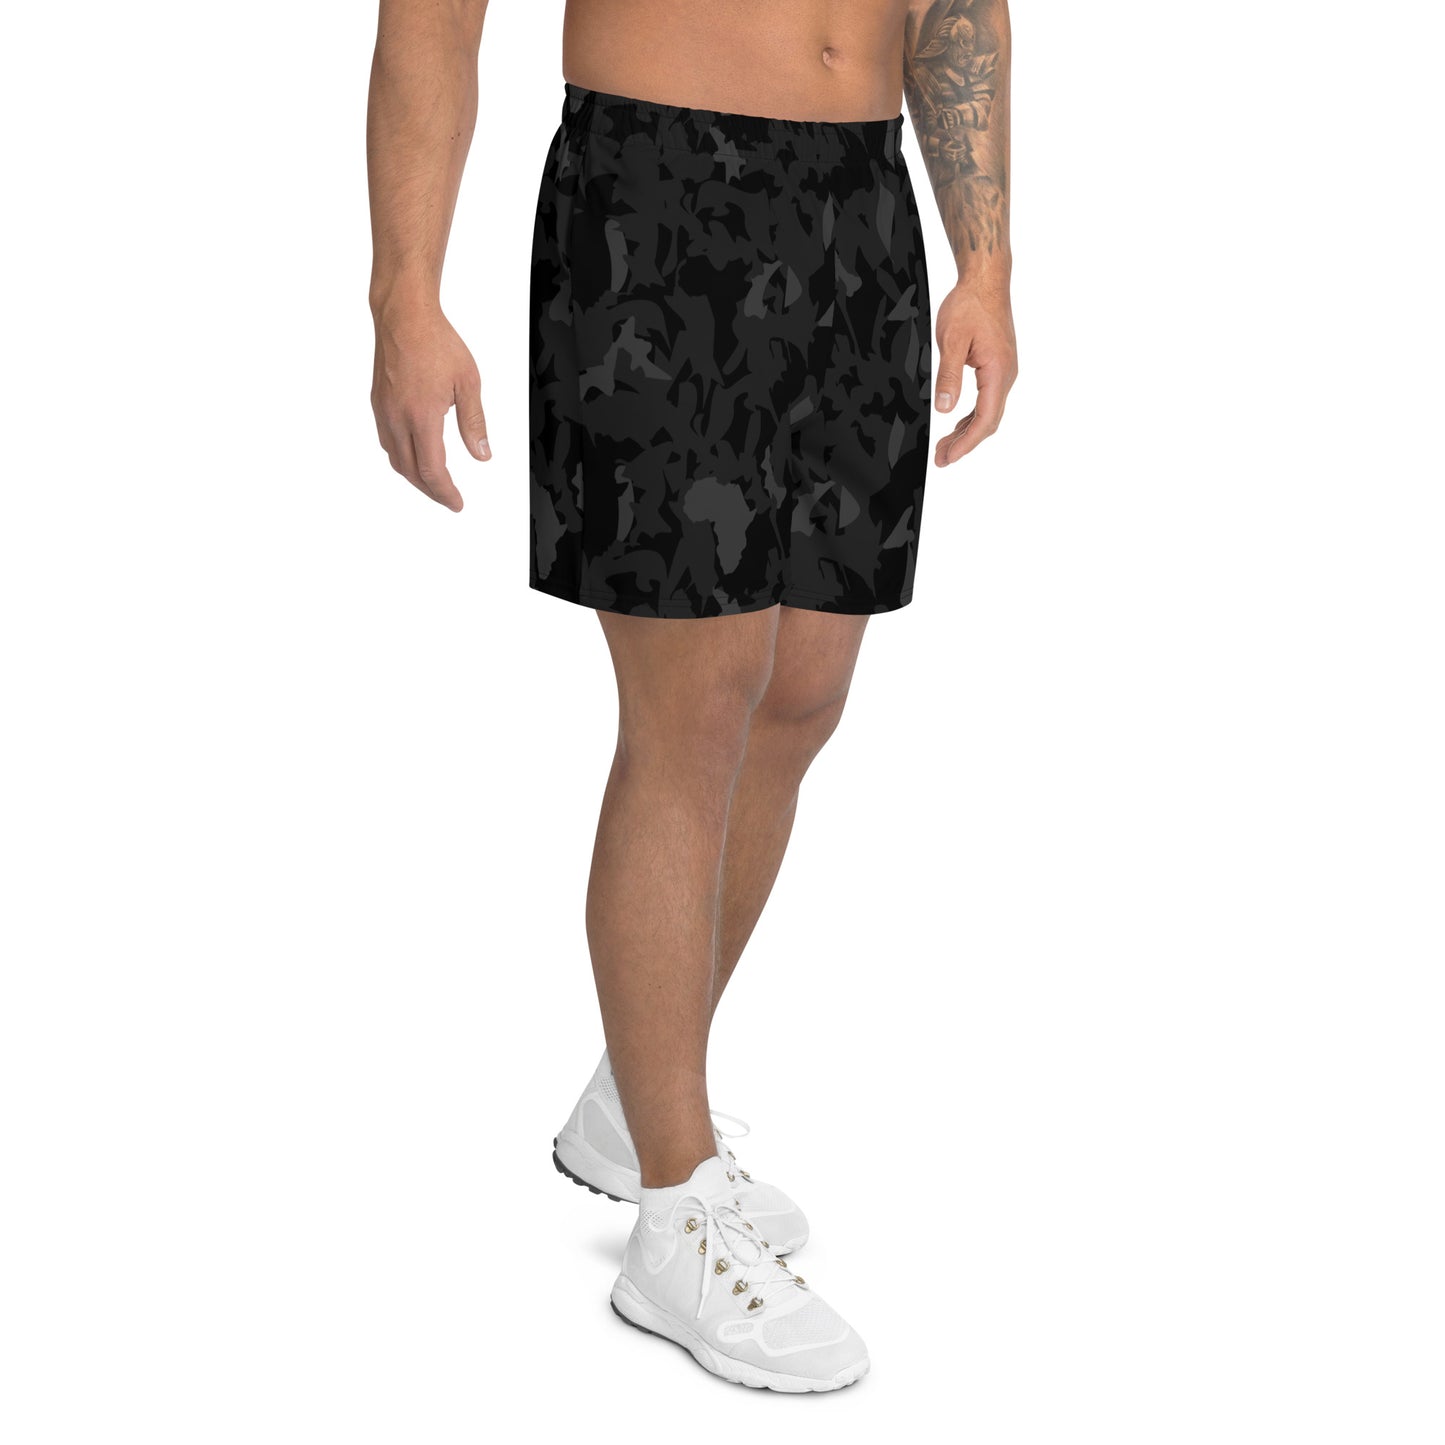 AfriBix Camo Noir Men's Recycled Athletic Shorts - Black